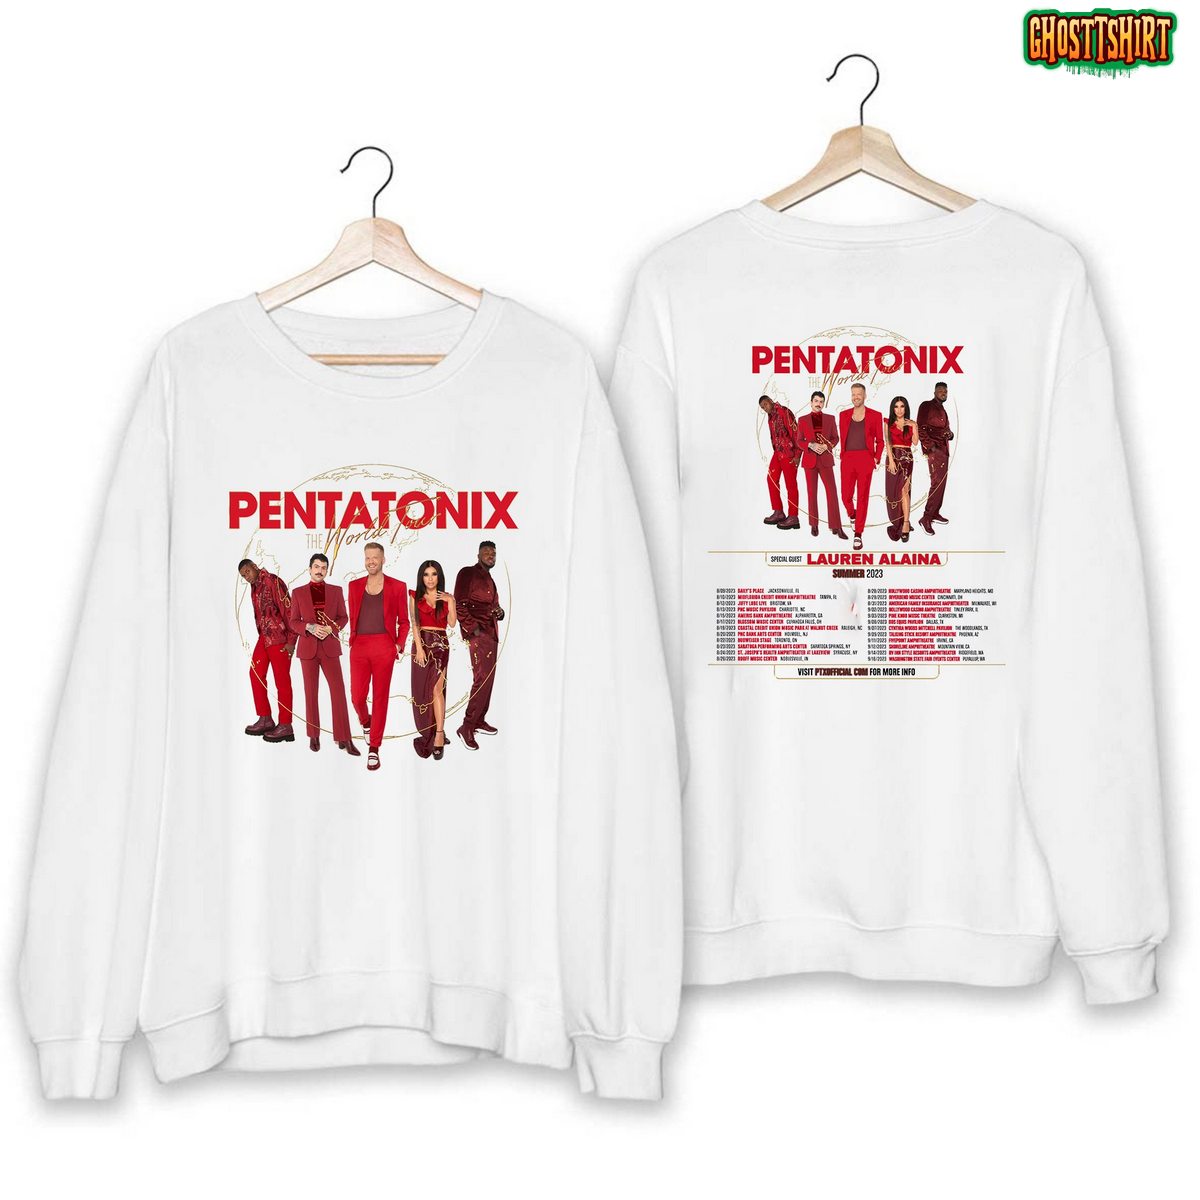 pentatonix tour t shirts